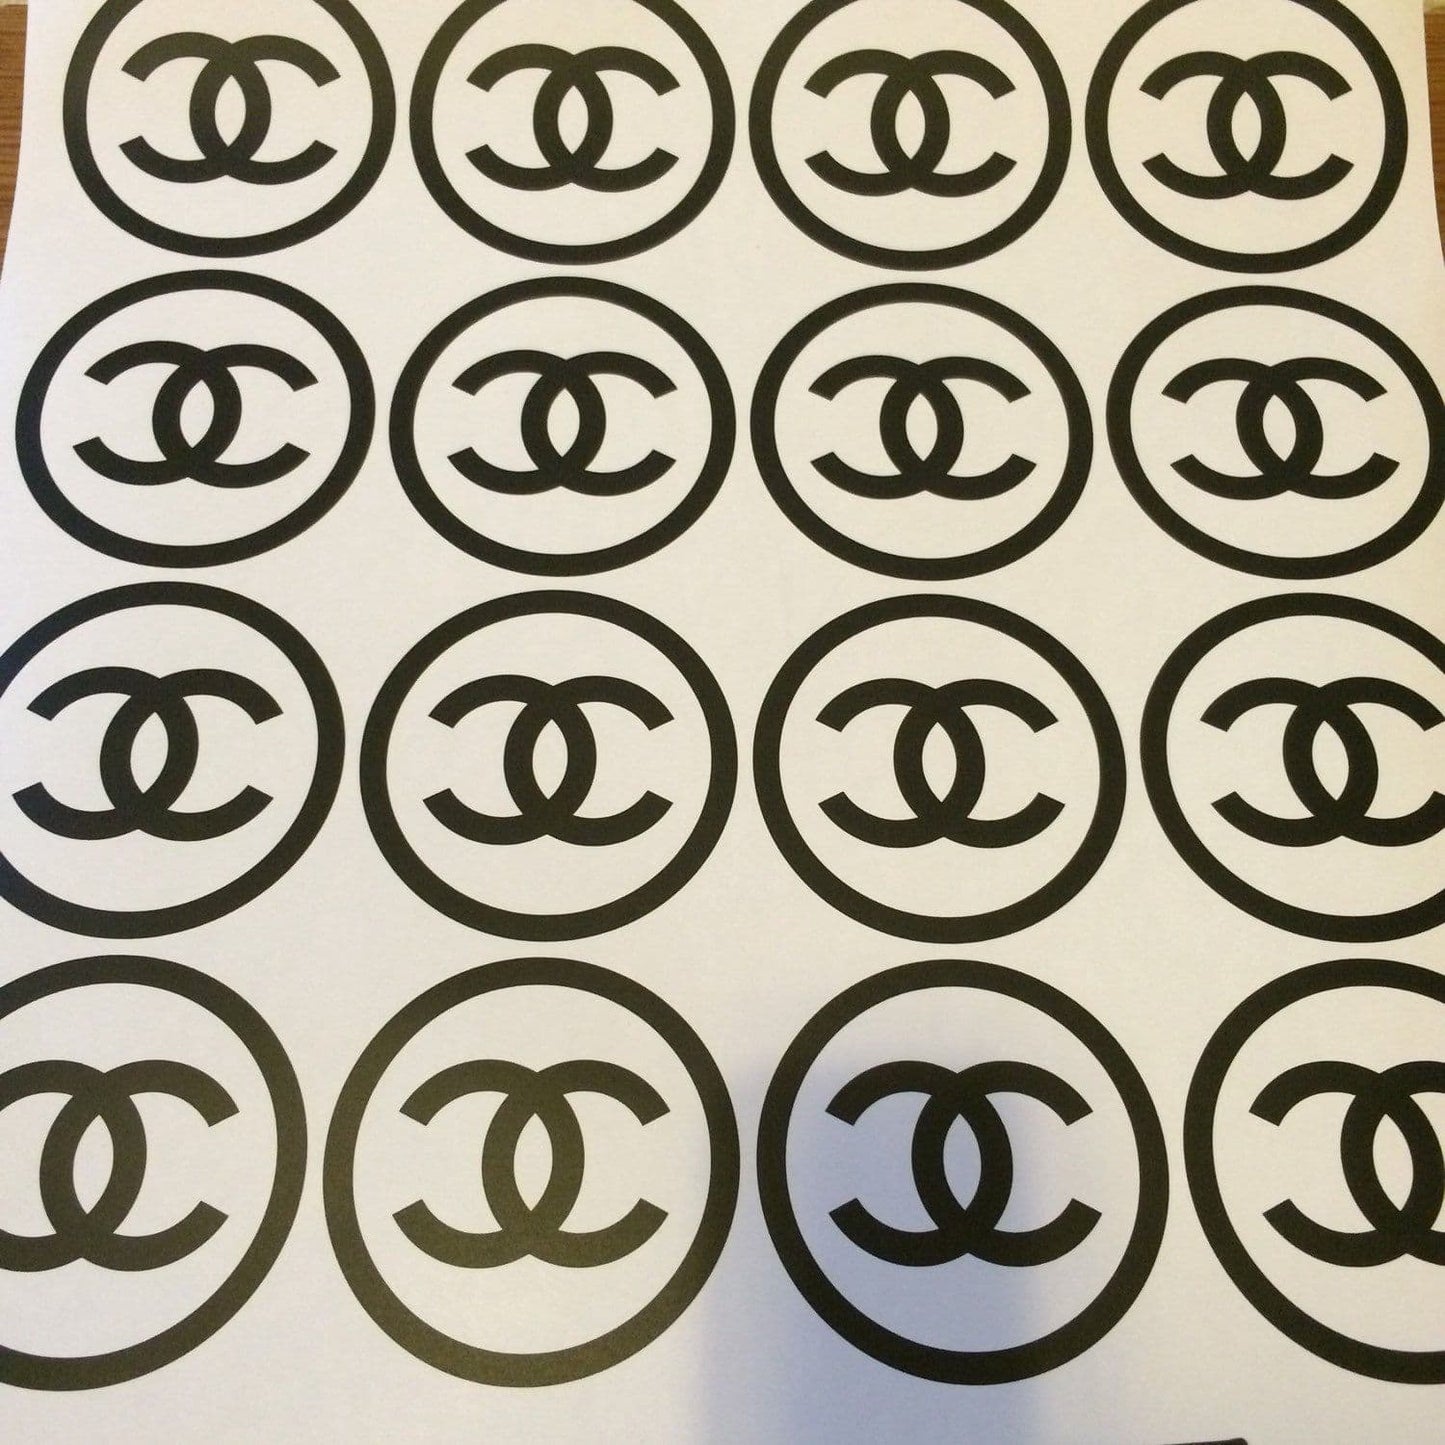 20 Chanel Stickers - Circle Logo